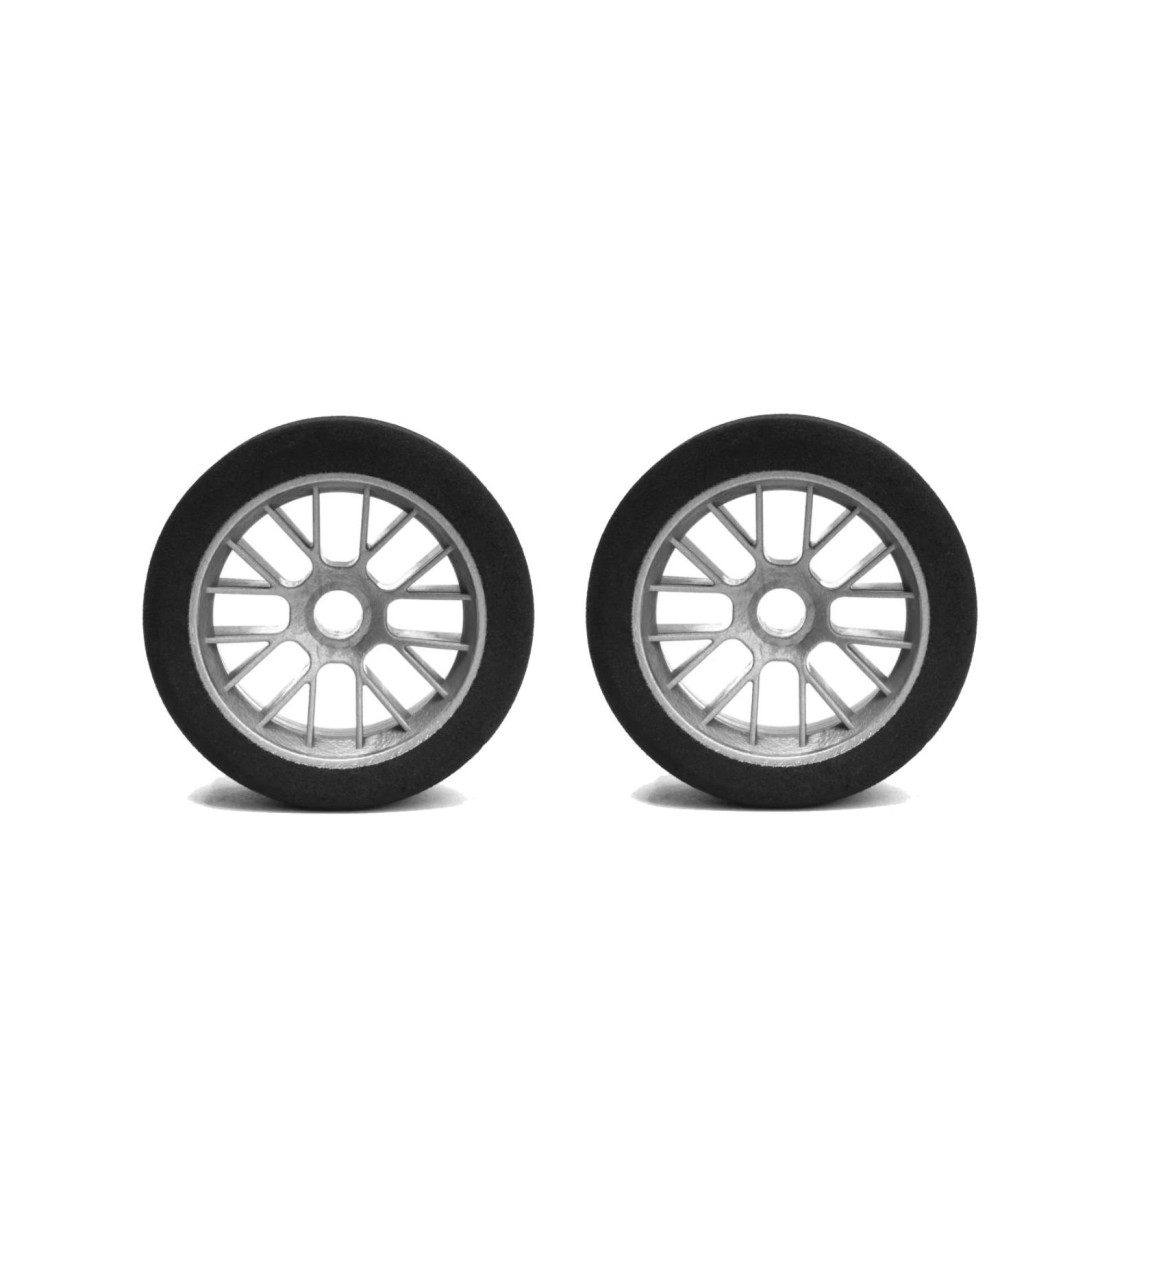 Hot Race Tires - 1:10 PanCar Moosgummi Reifen - vorne - 45 Shore (2 Stück)